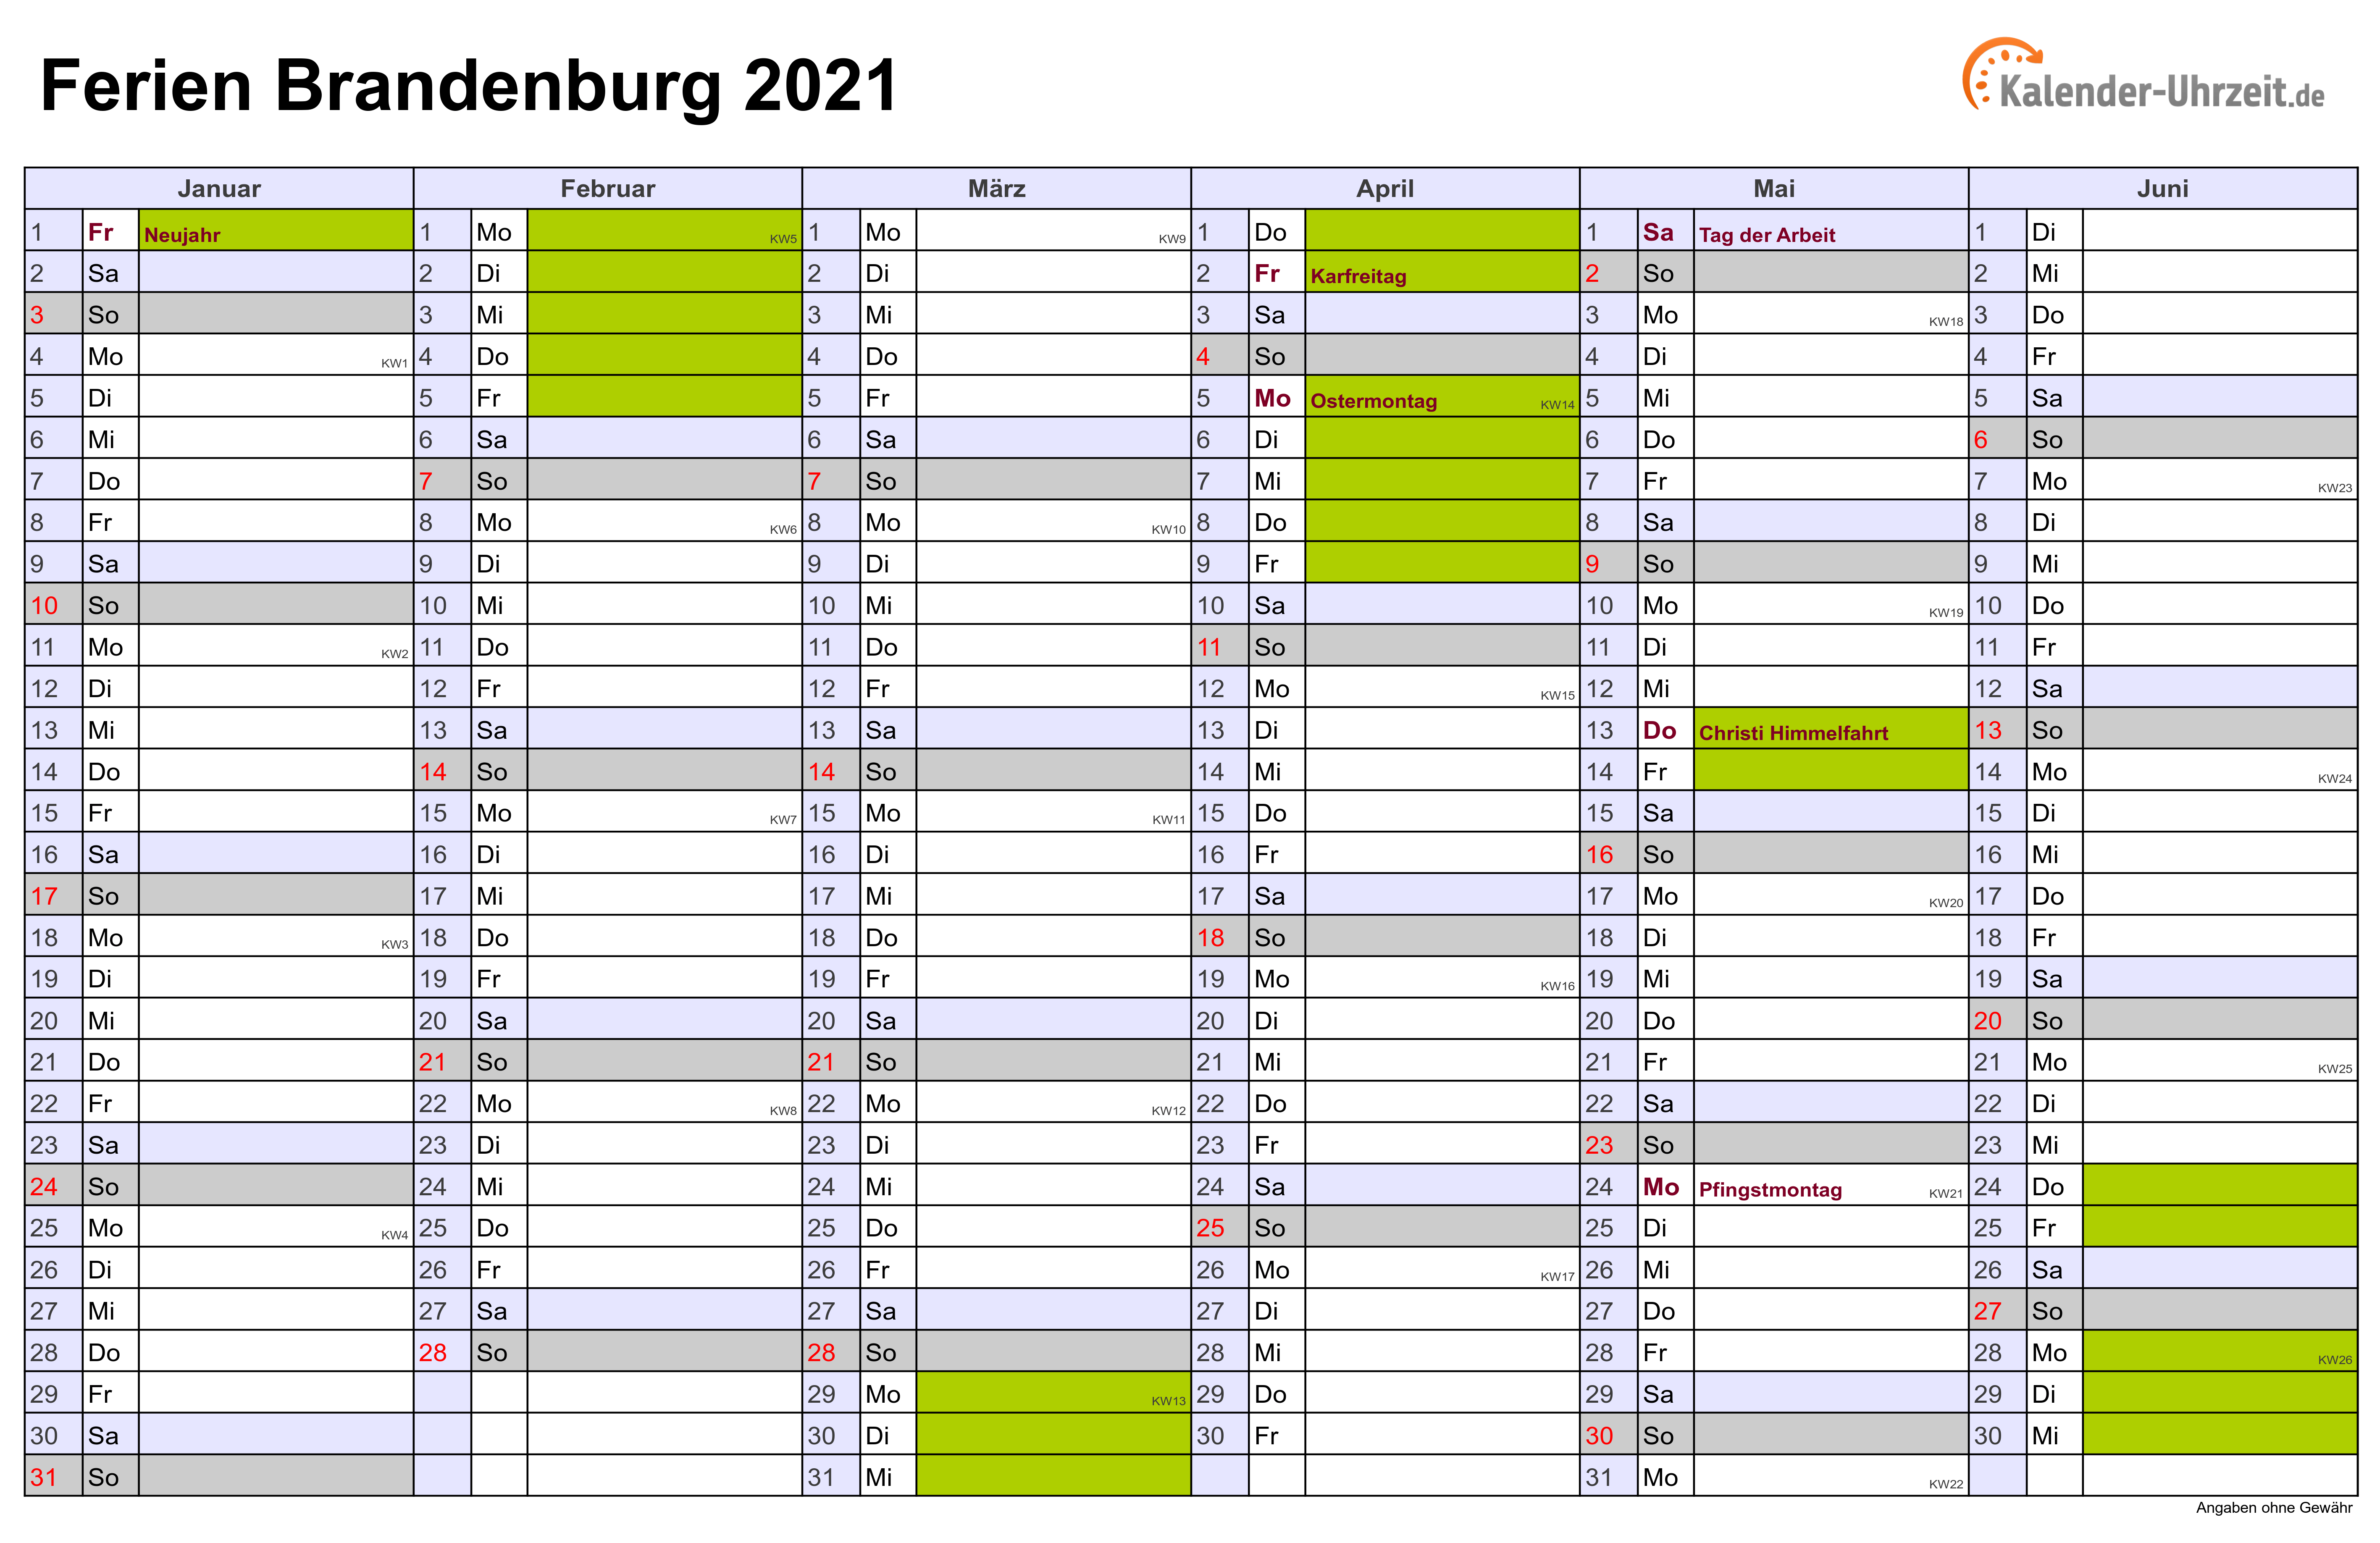 Ferien bayern 2021 Kalender 2021